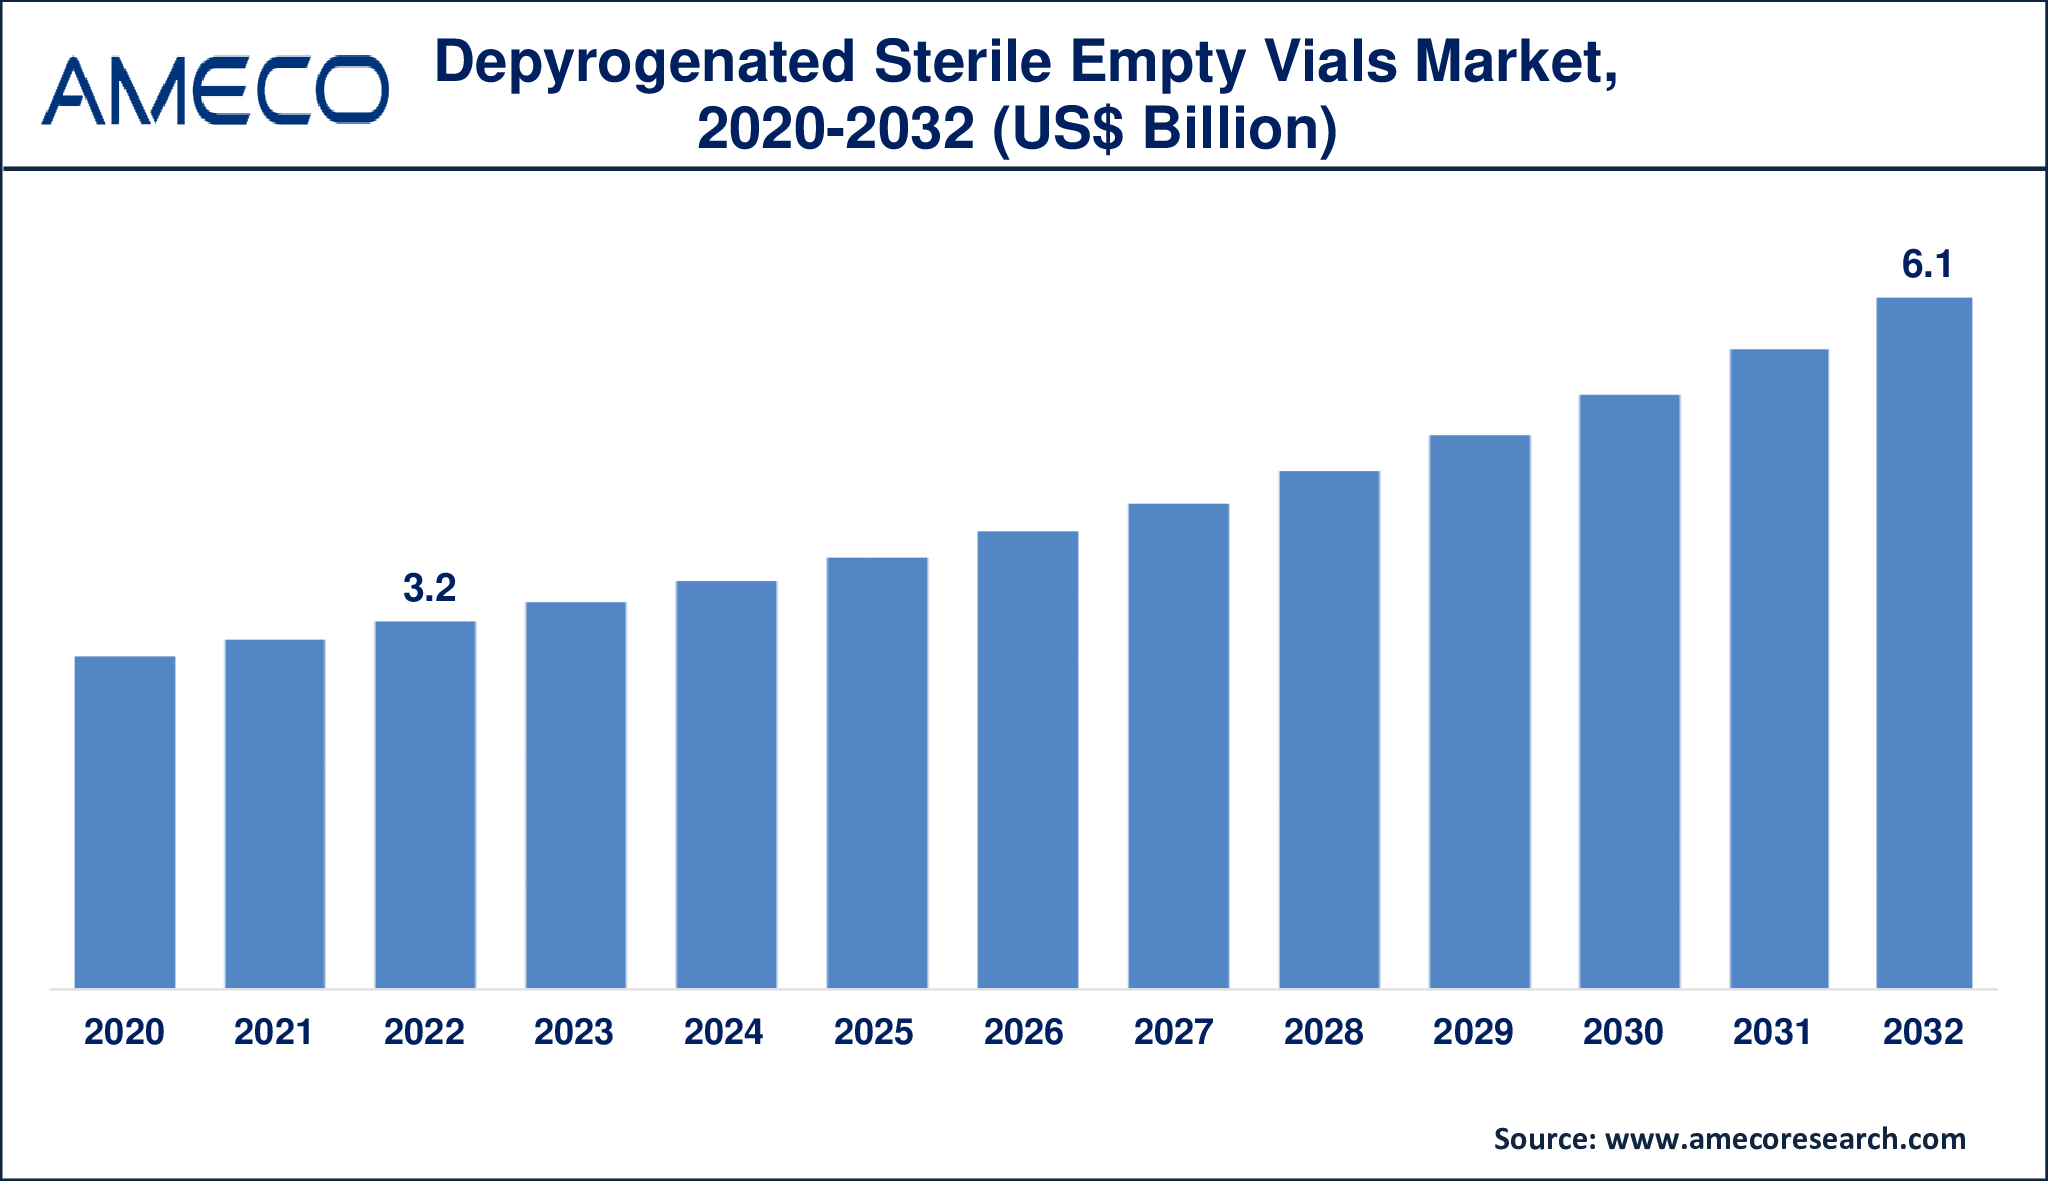 Depyrogenated Sterile Empty Vials Market Dynamics